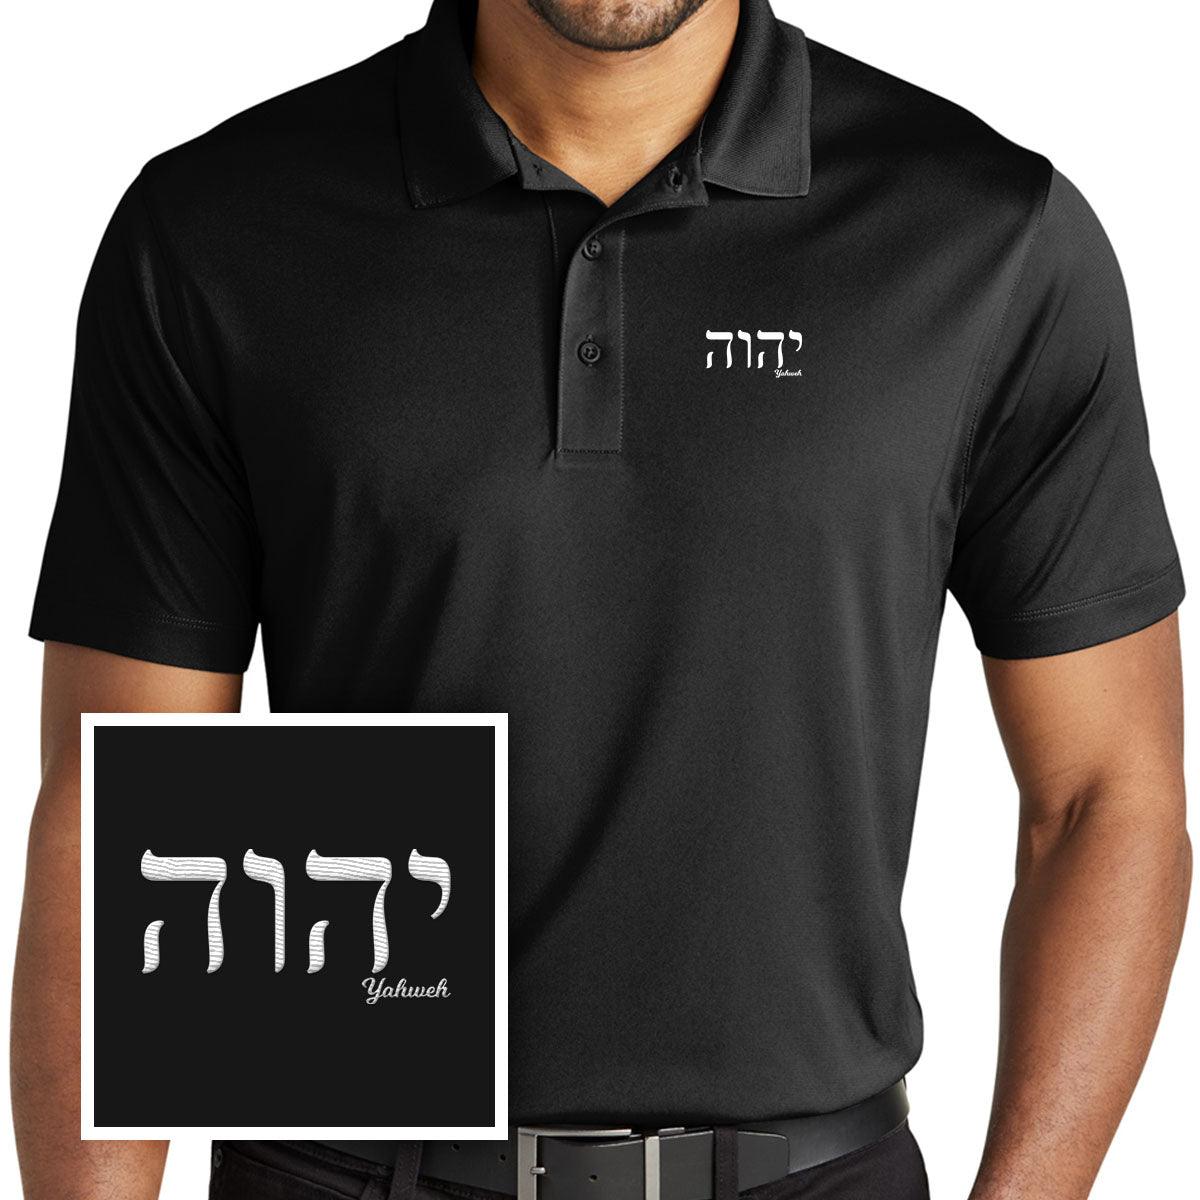 Yahweh Performance Polo Shirt - Our True God